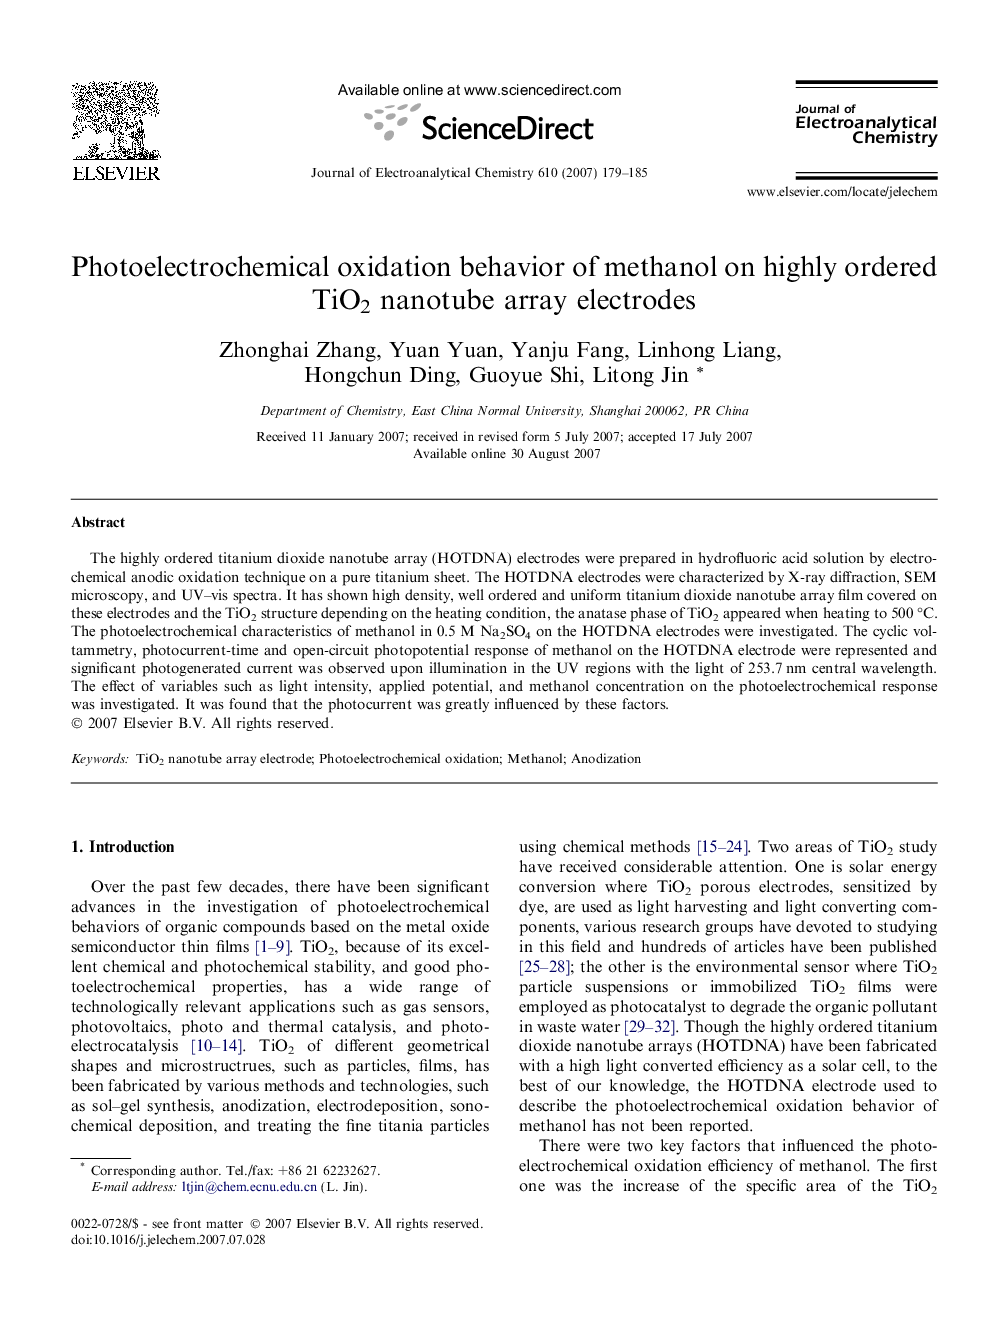 Photoelectrochemical oxidation behavior of methanol on highly ordered TiO2 nanotube array electrodes